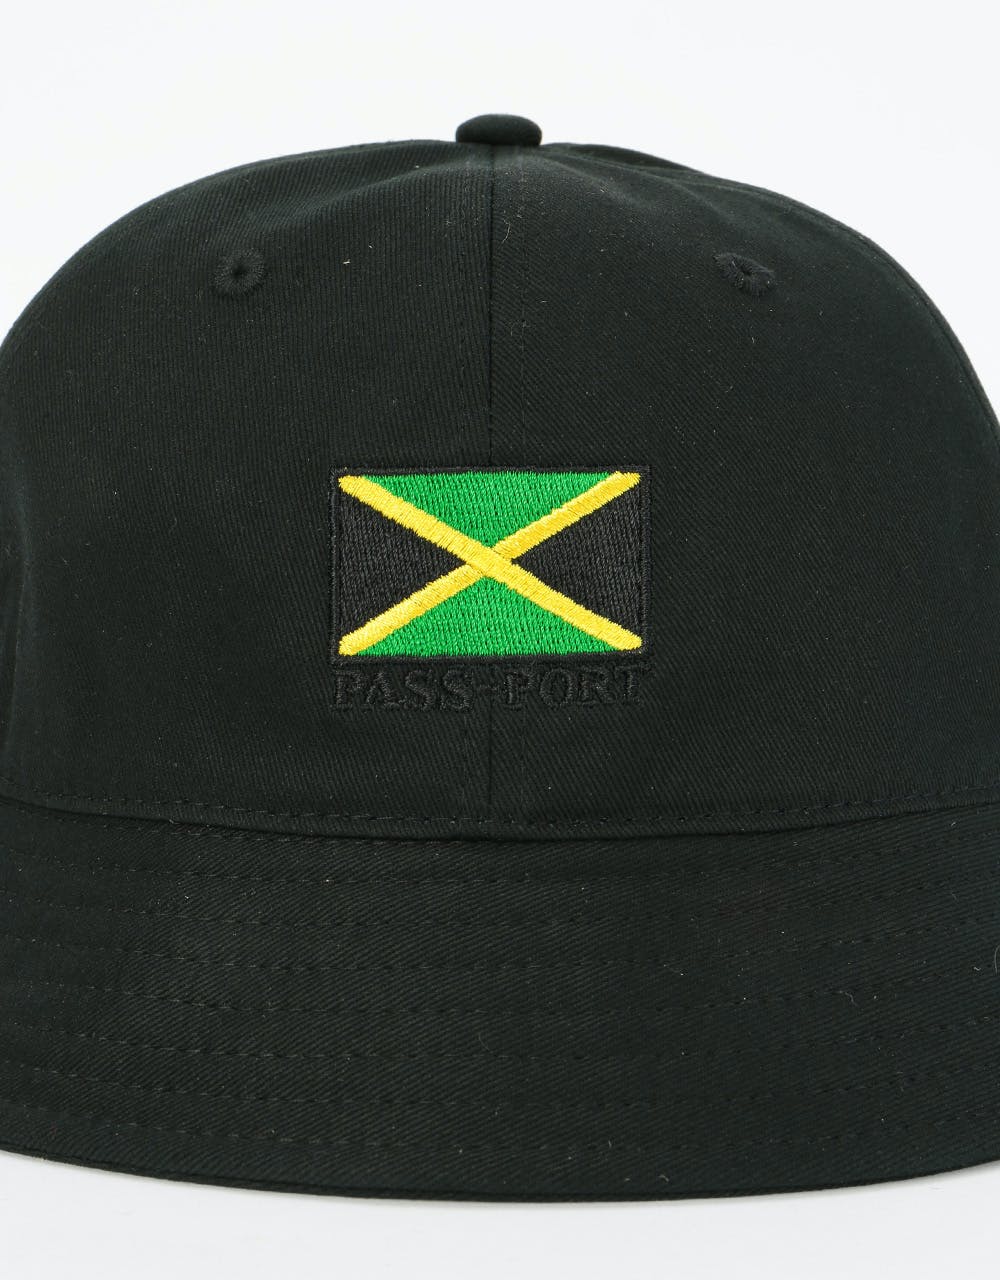 Pass Port Jamaica Twill Bucket Hat - Black